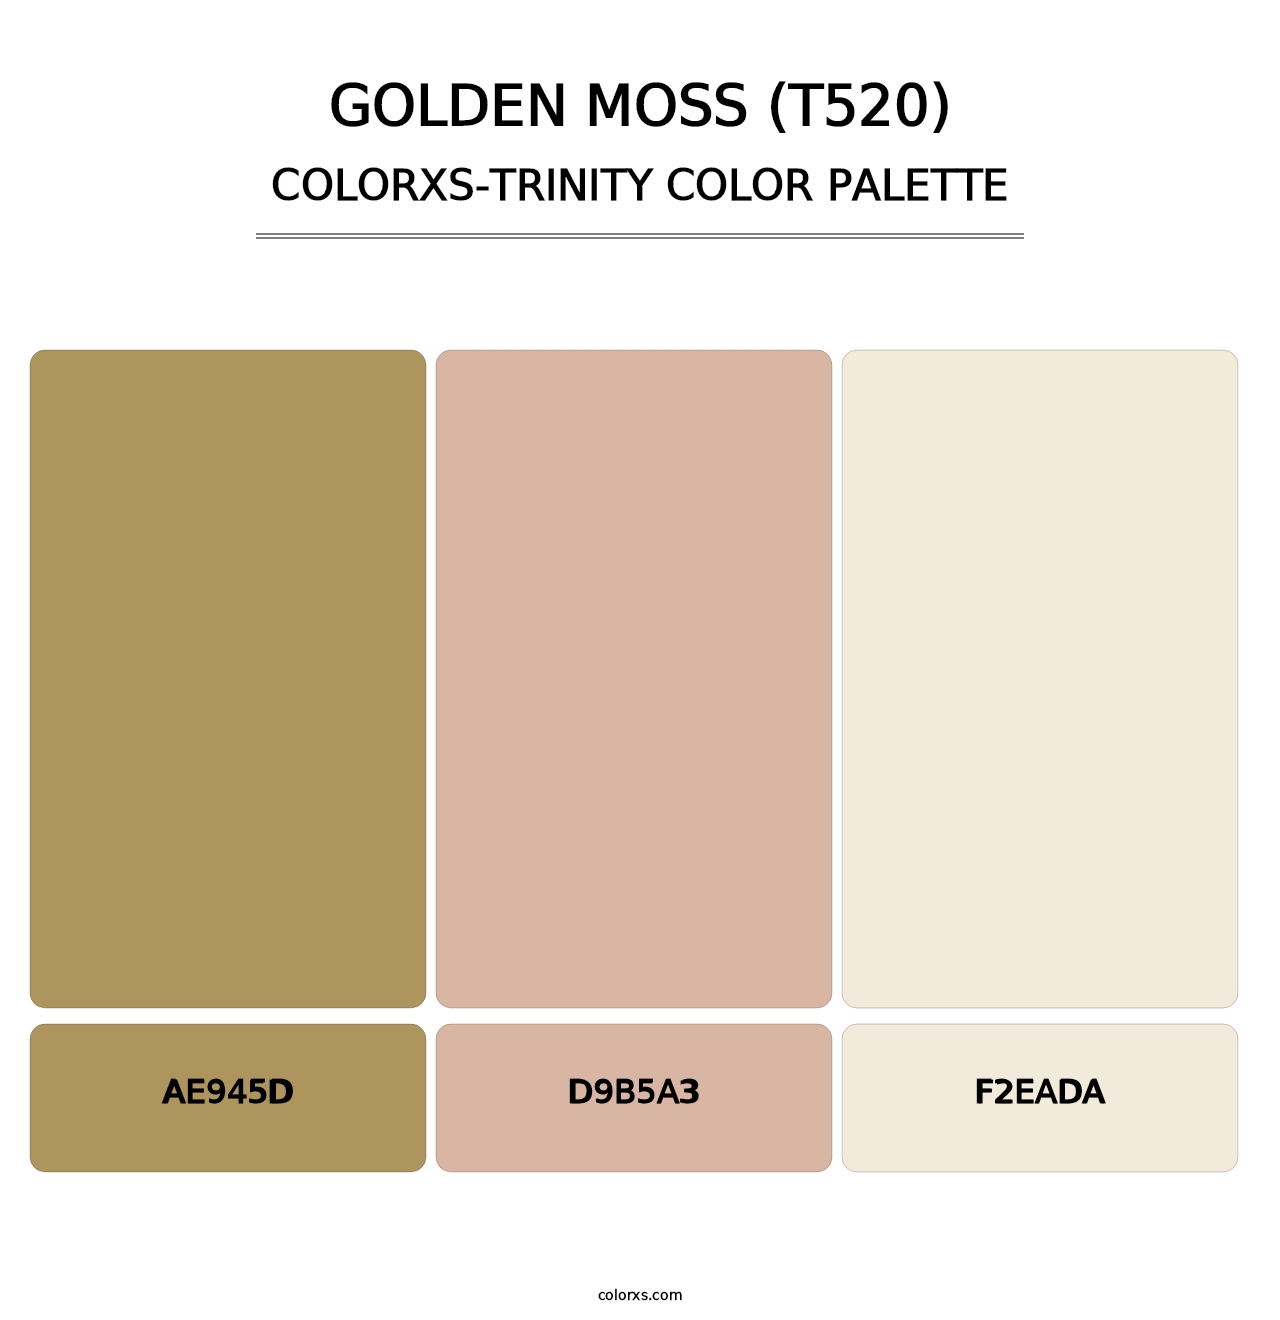 Golden Moss (T520) - Colorxs Trinity Palette